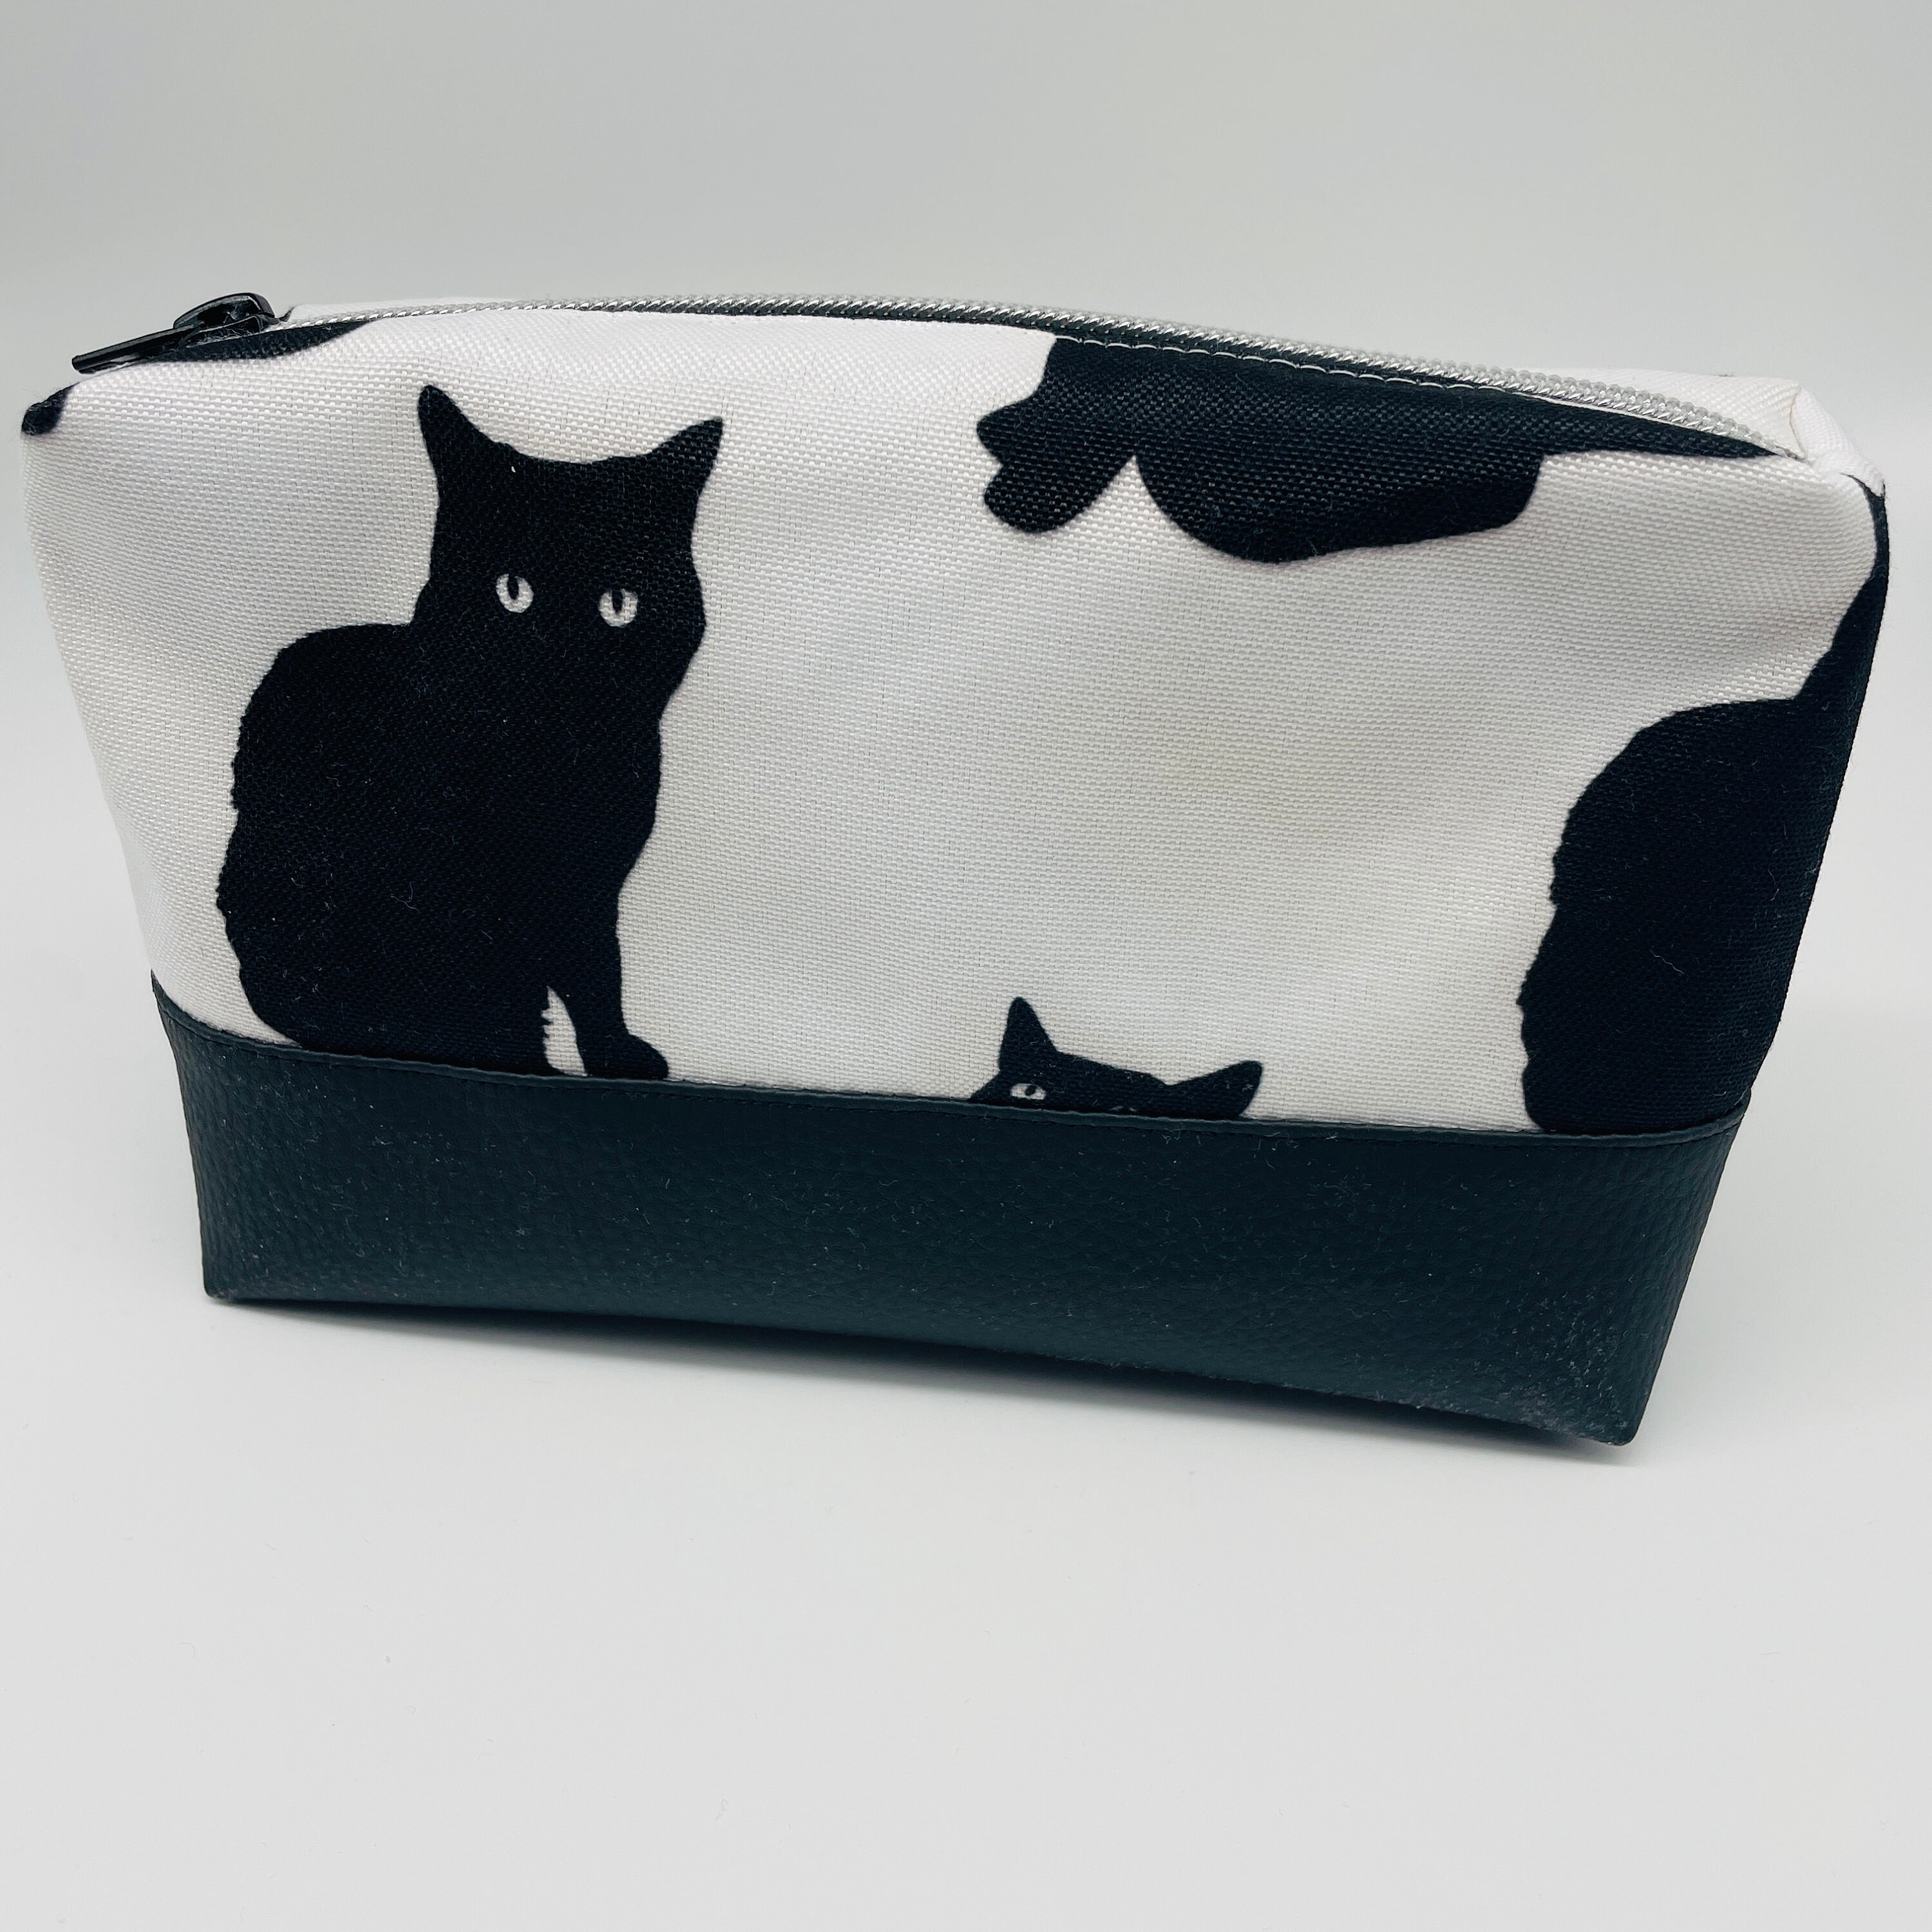 Reisaccessoires Cat Lover Gift Metalen Frame Make-Up Bag Tassen & portemonnees Tasjes & Miniportemonnees Cat Print Kiss Lock Cosmetische Portemonnee 